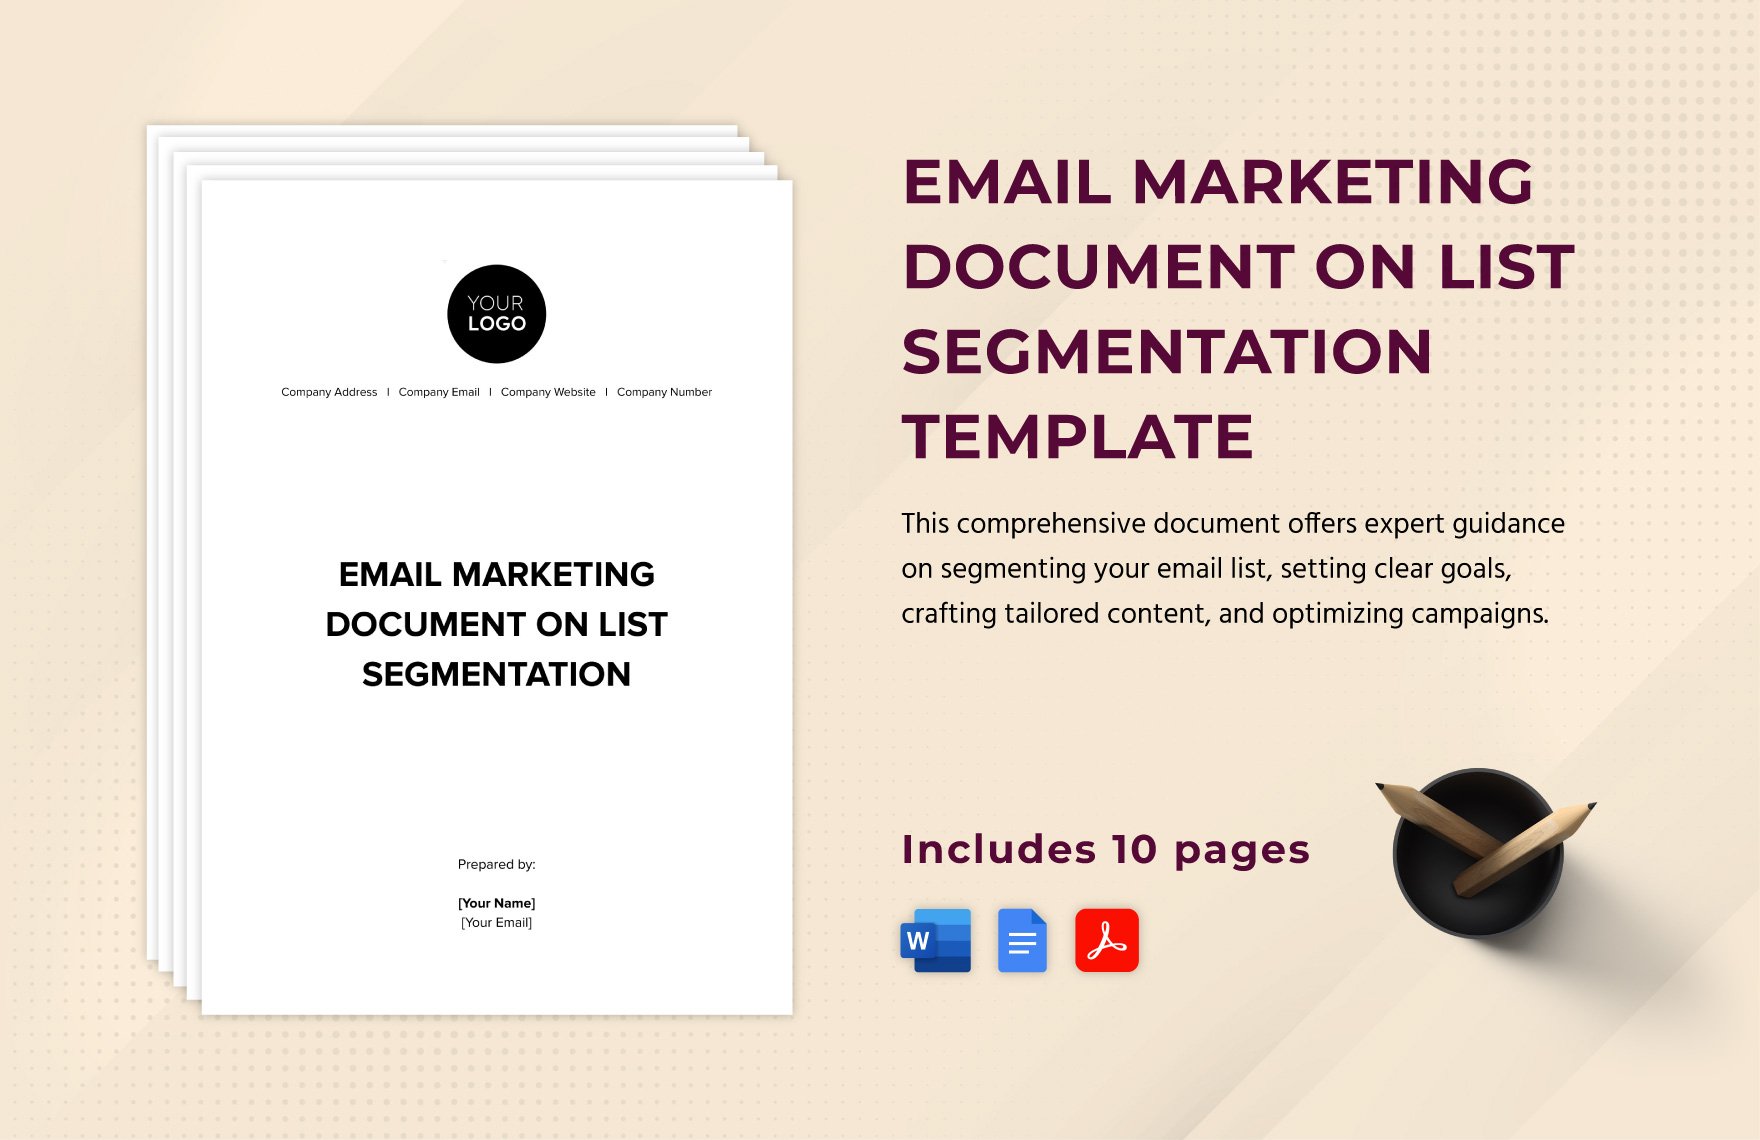 Email Marketing Document on List Segmentation Template